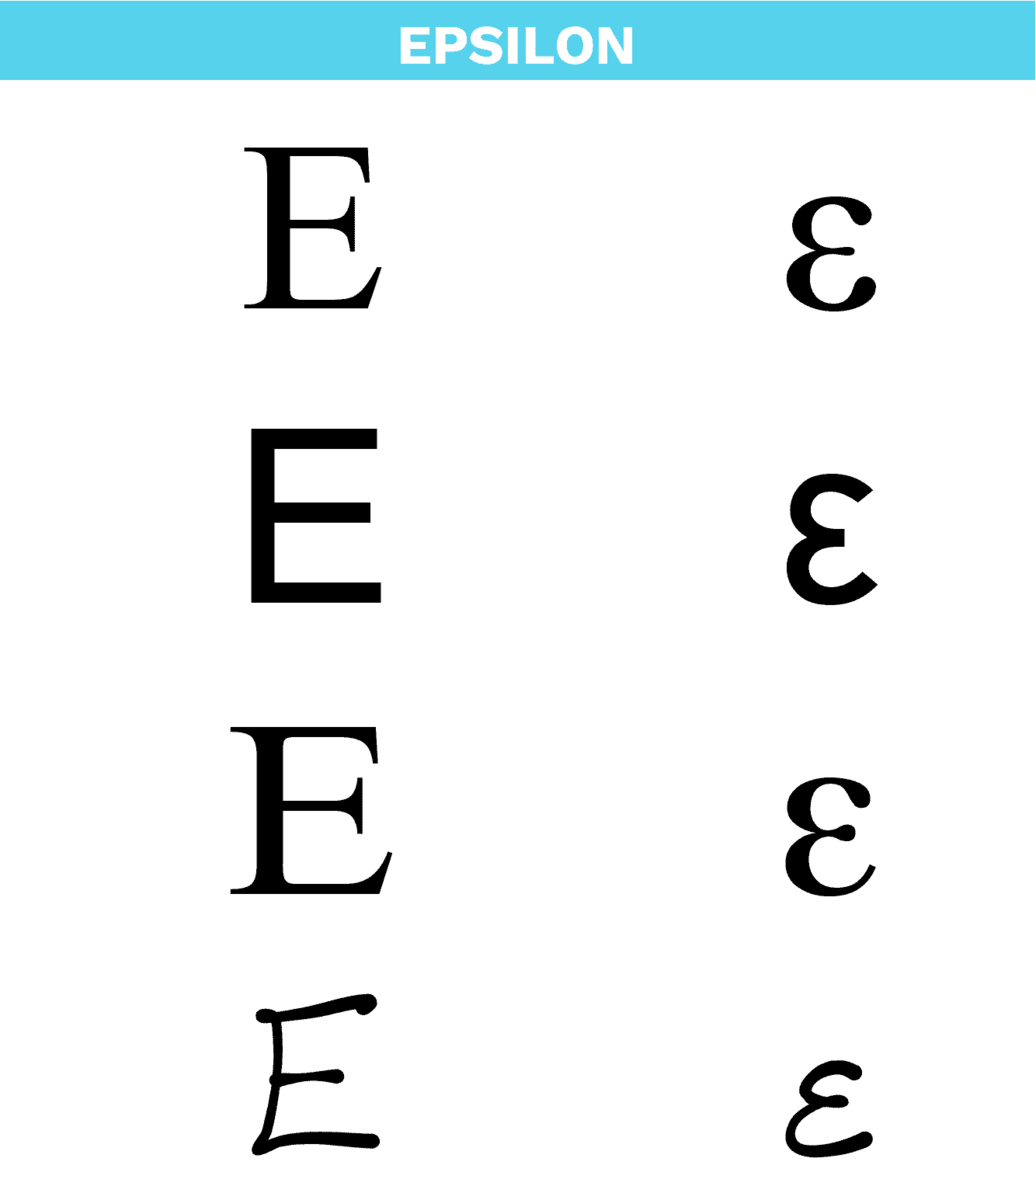 Bokstaven epsilon i det greske alfabetet i ulike skrifttypar